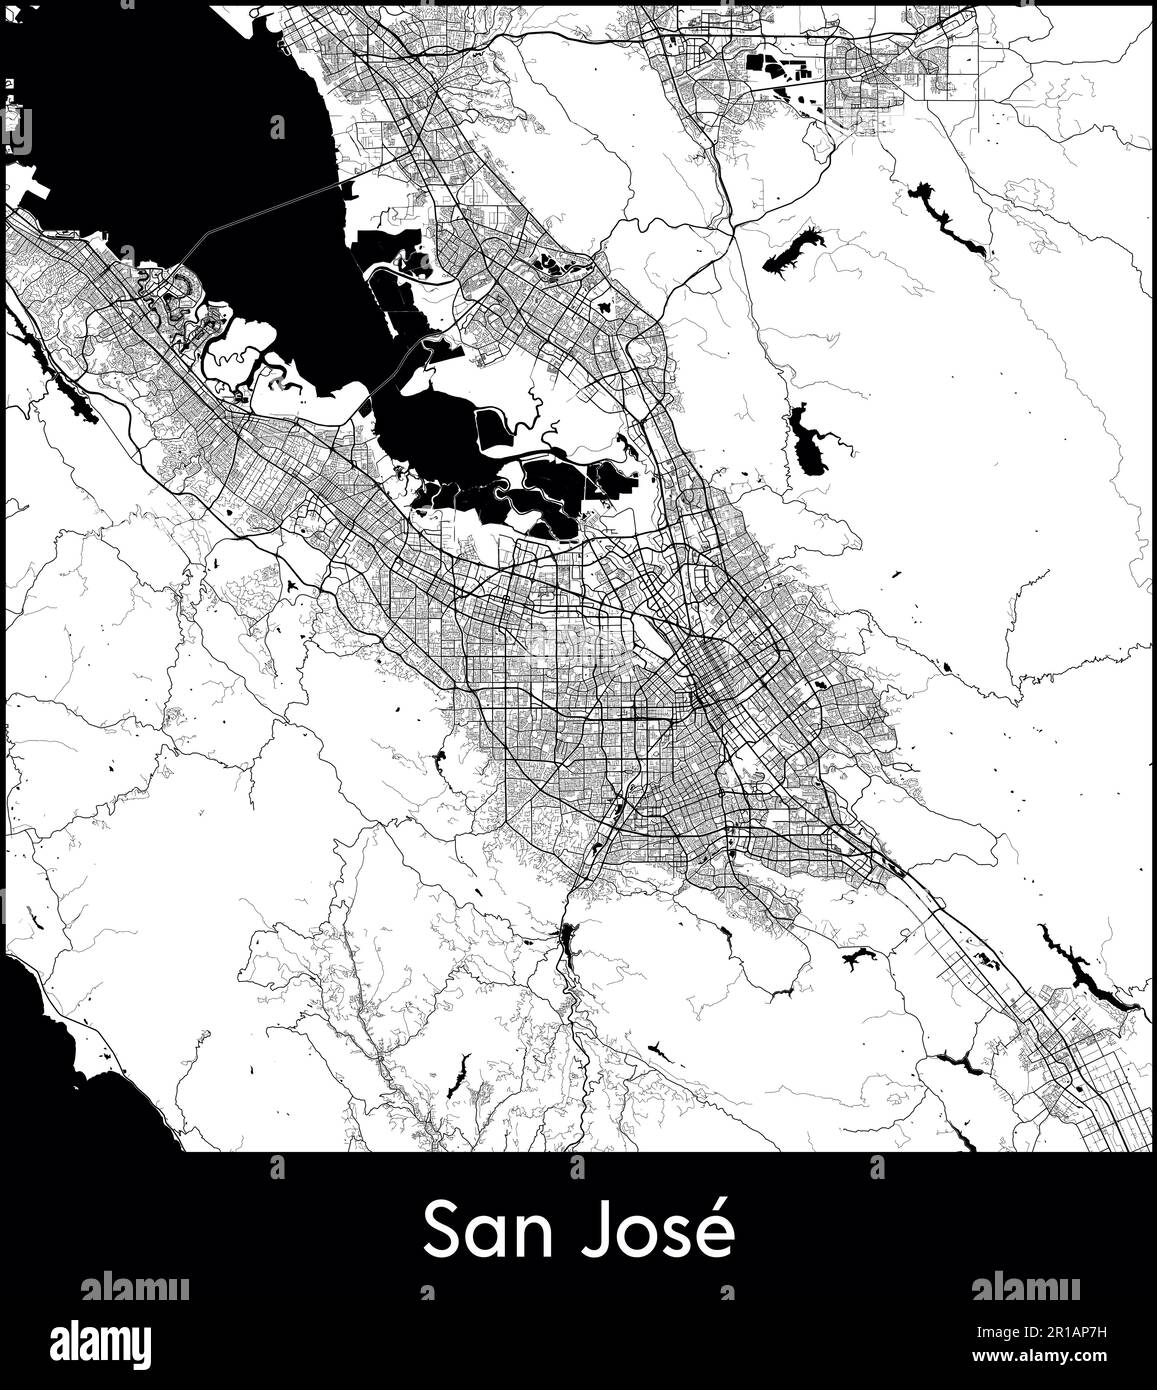 City Map North America United States San Jose vector illustration Stock Vector